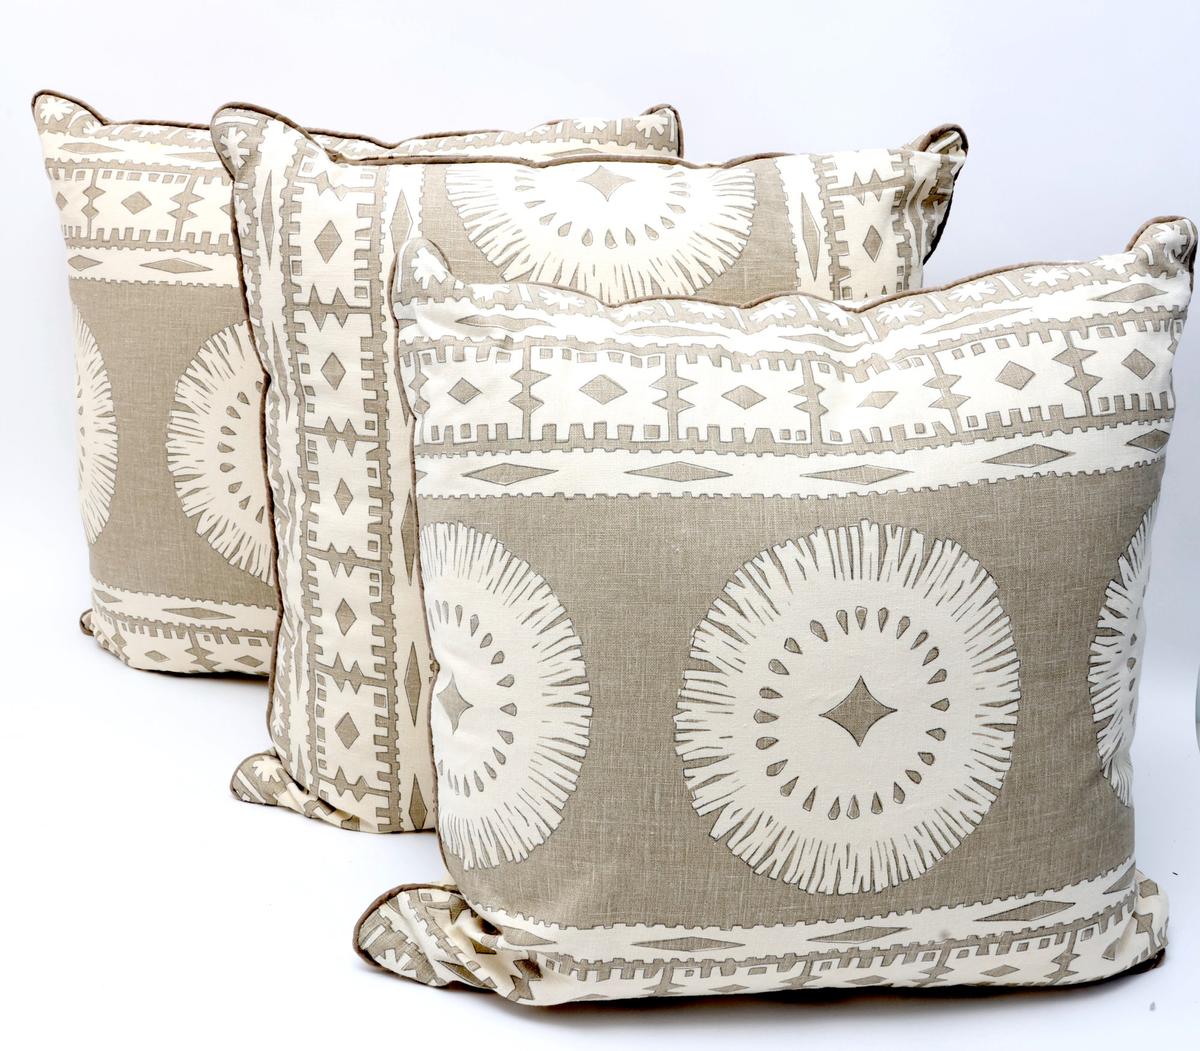 Tribal Organic Printed Linen Throw Pillows